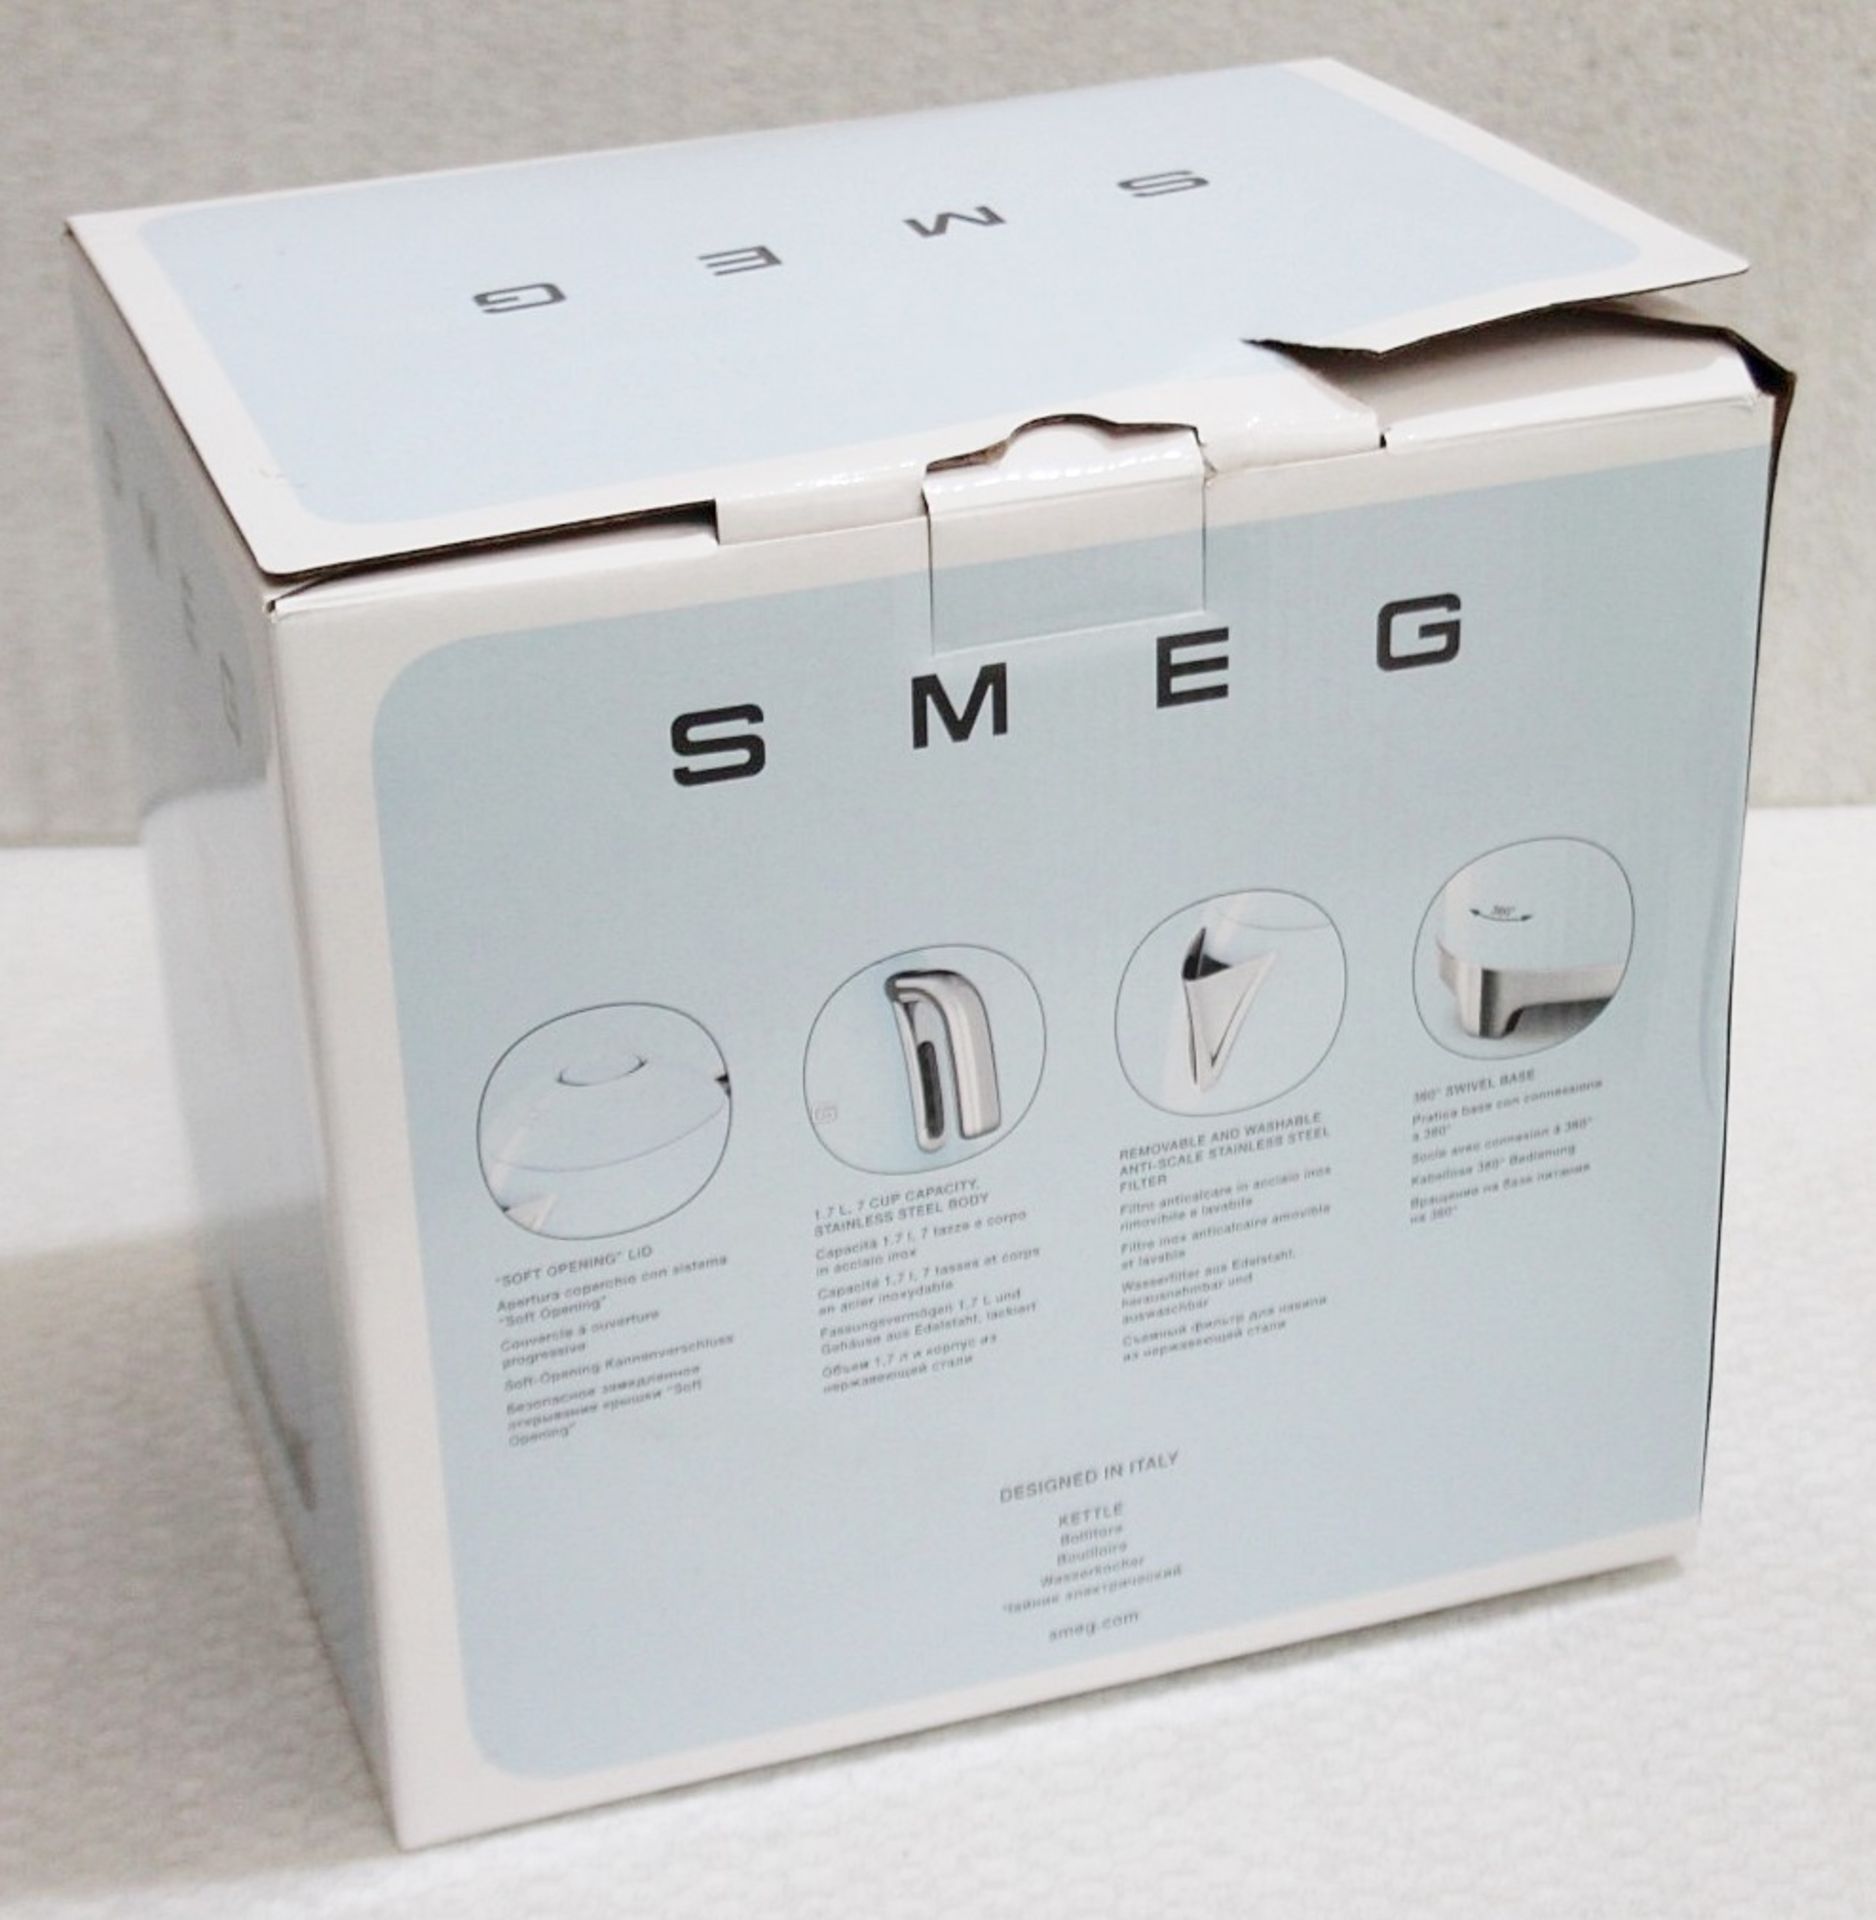 1 x SMEG Retro Kettle In White - Capacity: 1.7L - Original Price £189.00 - Unused Boxed Stock - Image 17 of 17